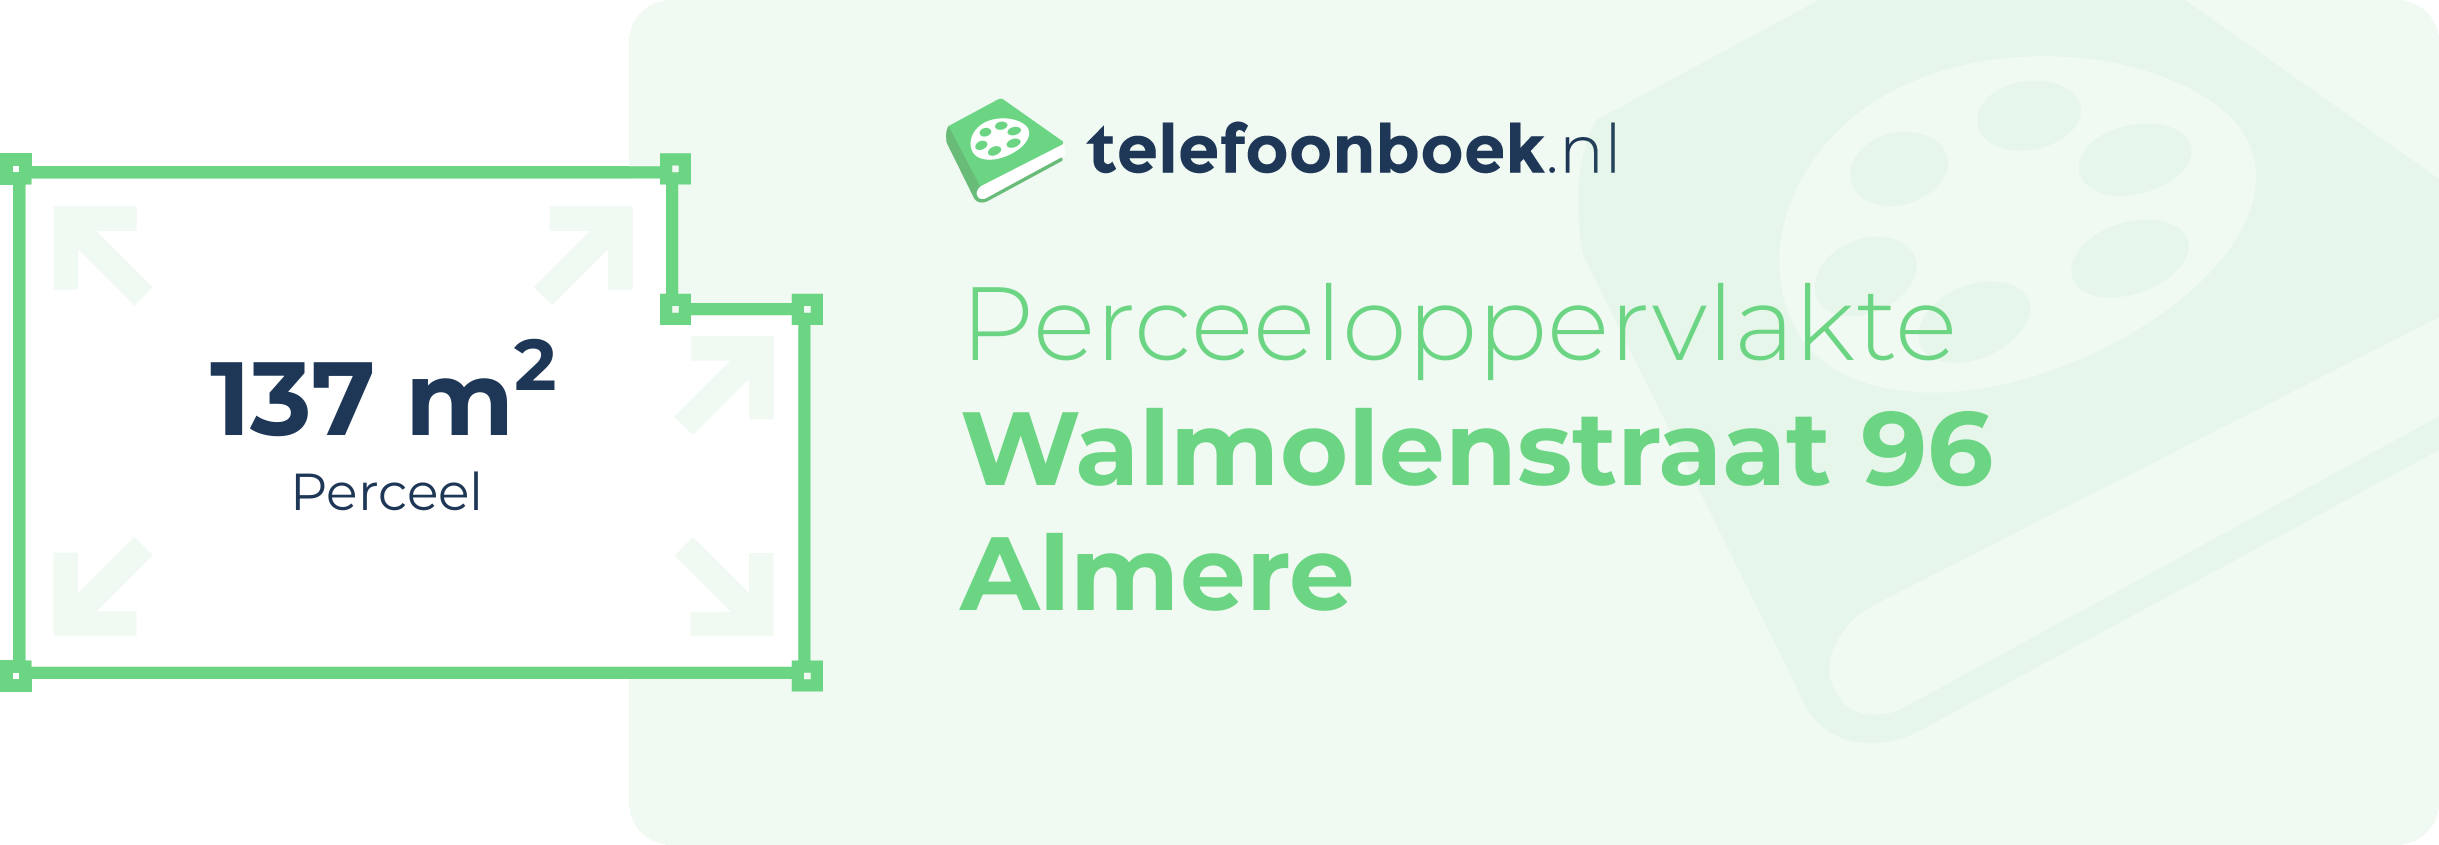 Perceeloppervlakte Walmolenstraat 96 Almere